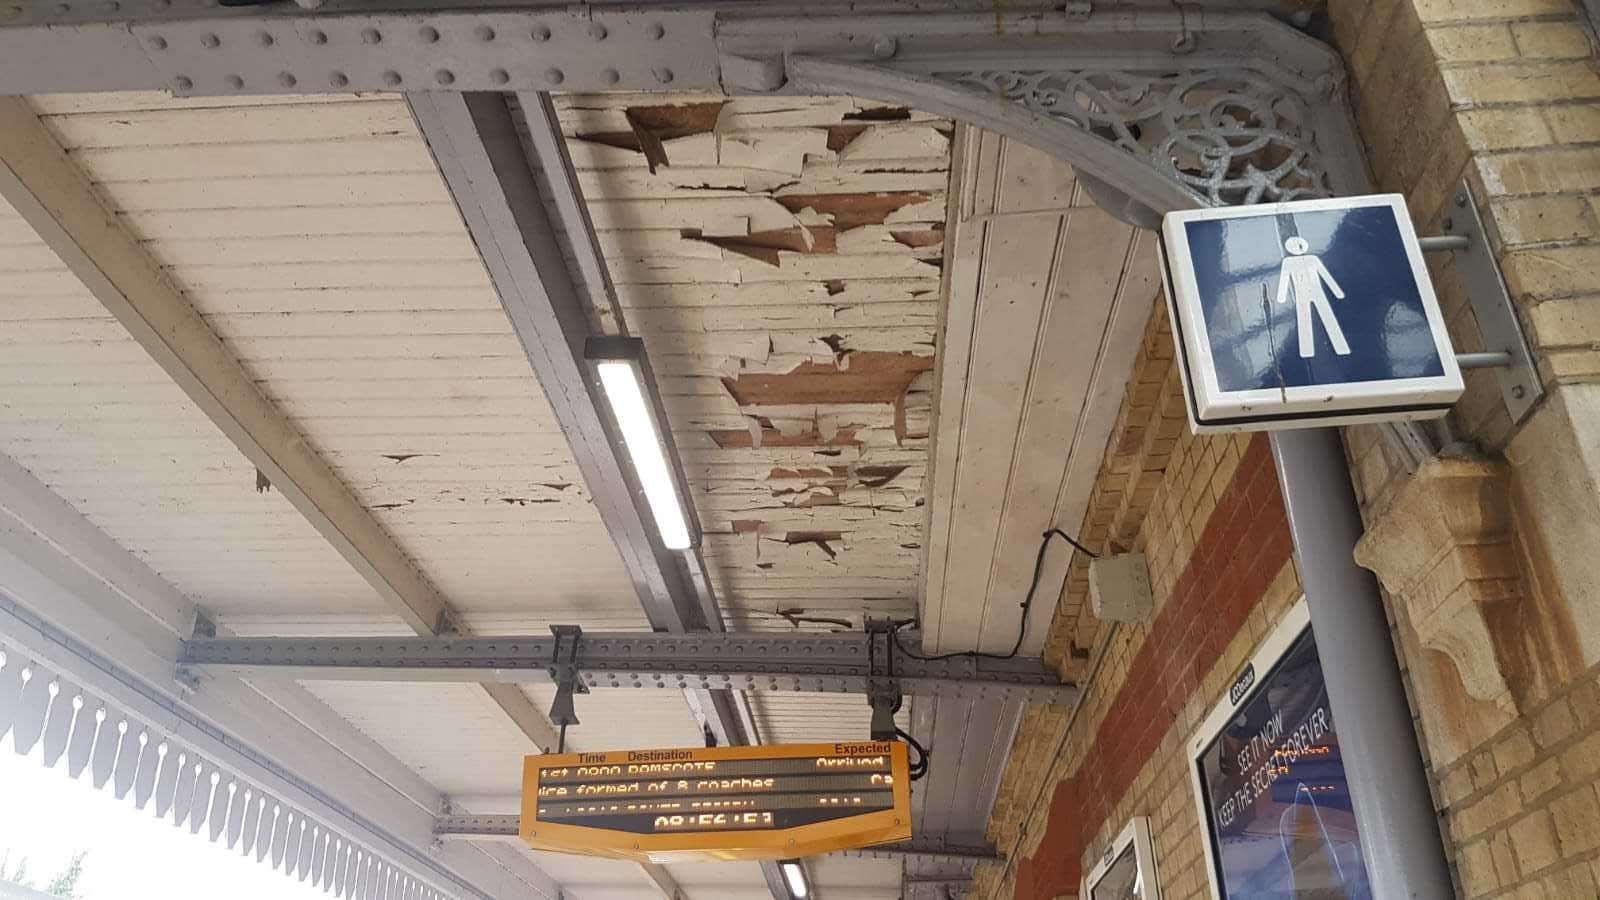 Evidence of the deterioration of Faversham train station